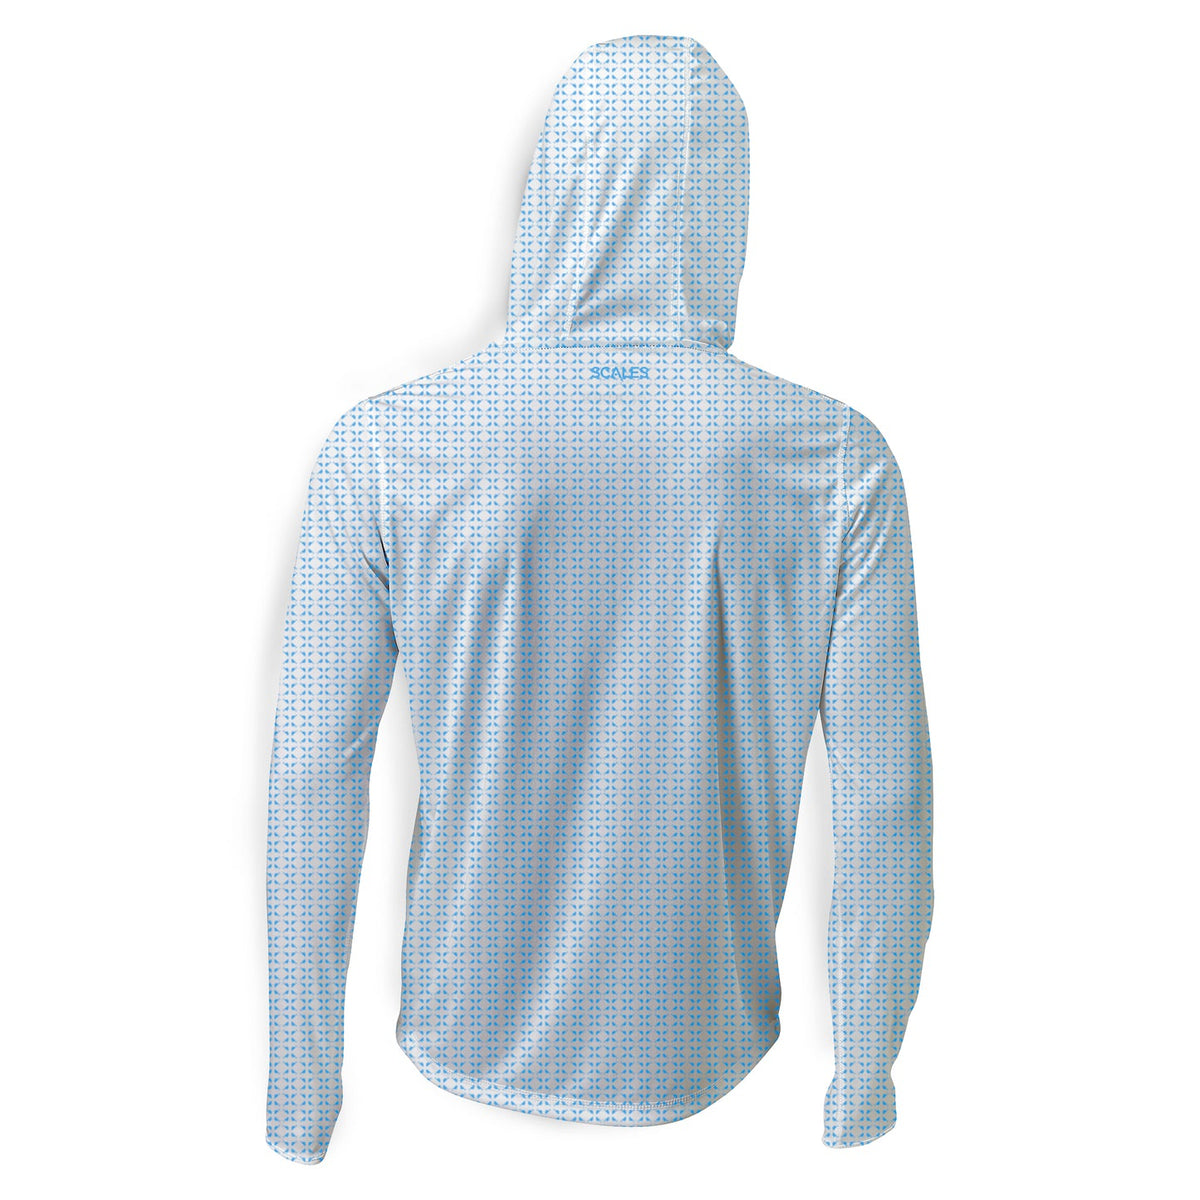 SCALES Nautical Sail Hooded Long Sleeve Performance Shirt